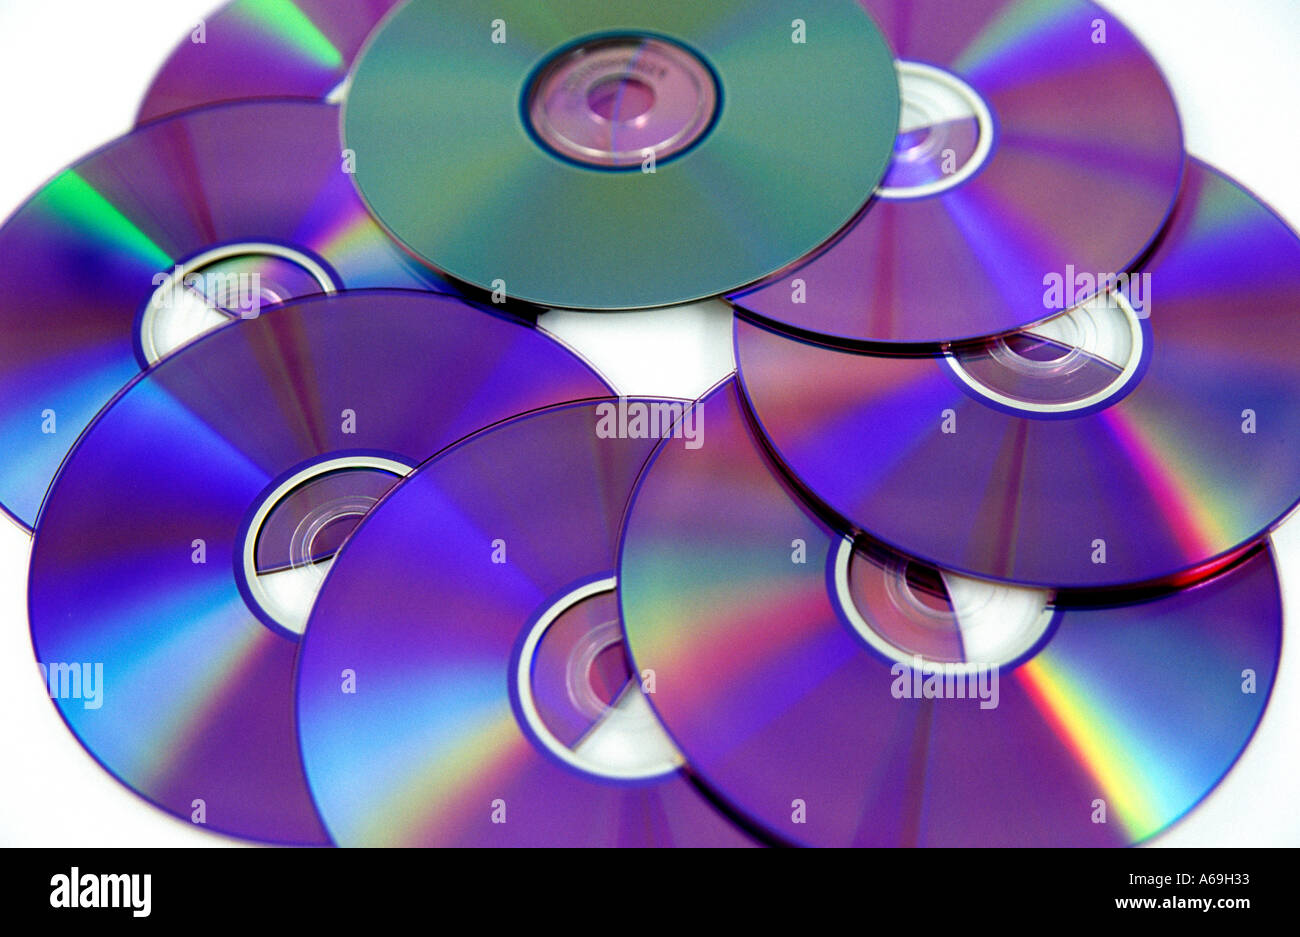 CD DVD Disque disques Compact Disc Digital Versatile Disk Photo Stock -  Alamy